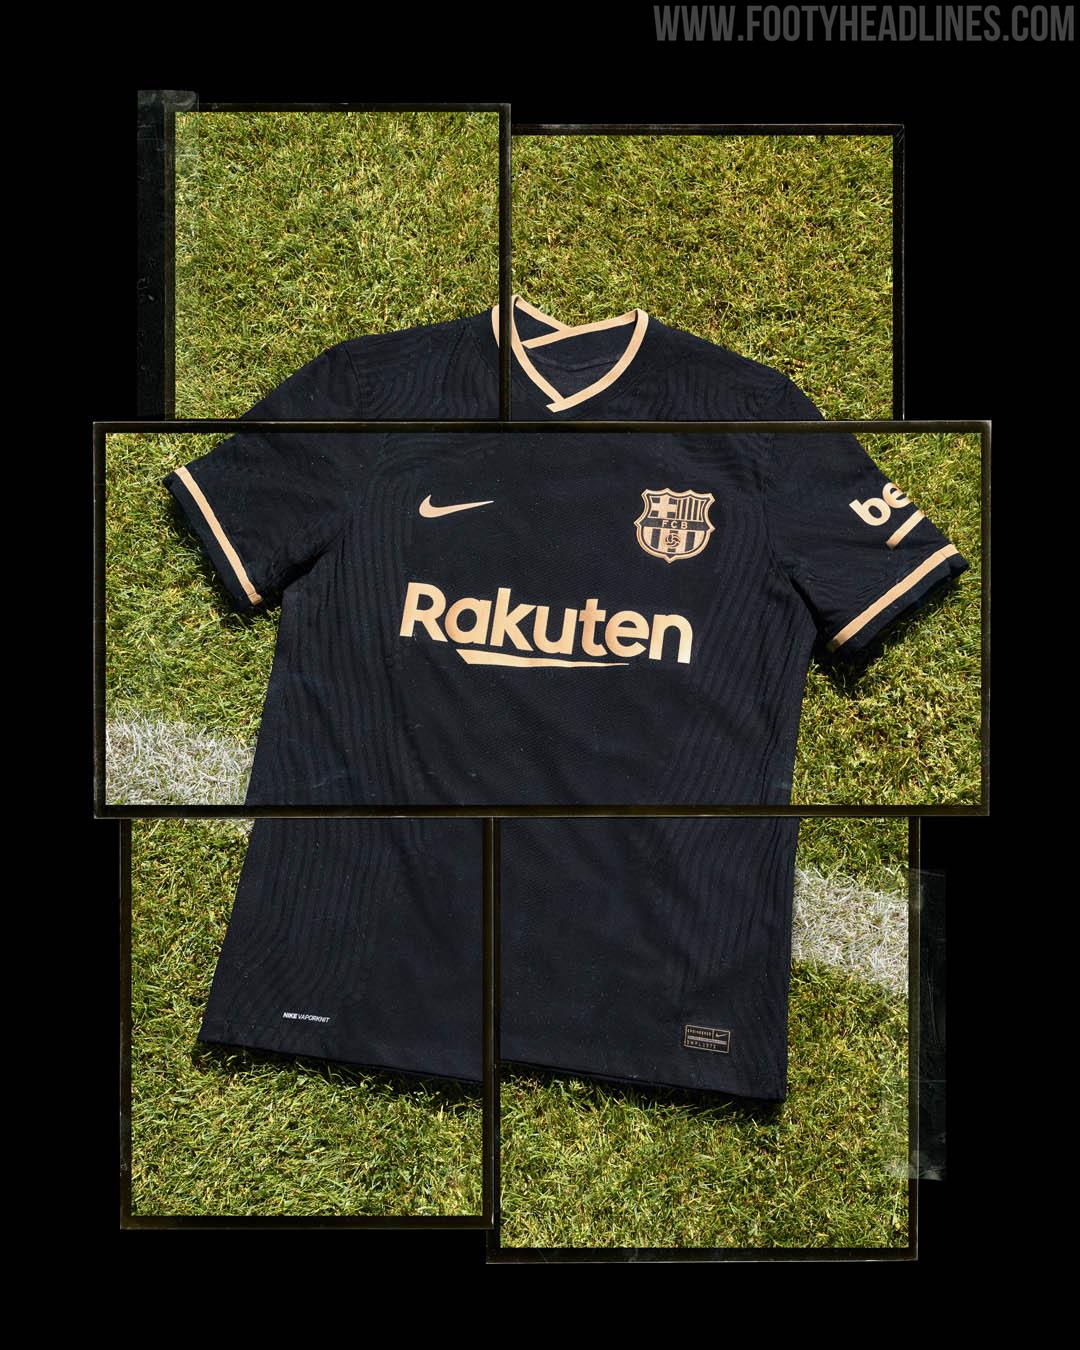 Barcelona 19-20 Away Kit Concept Revealed - Footy Headlines